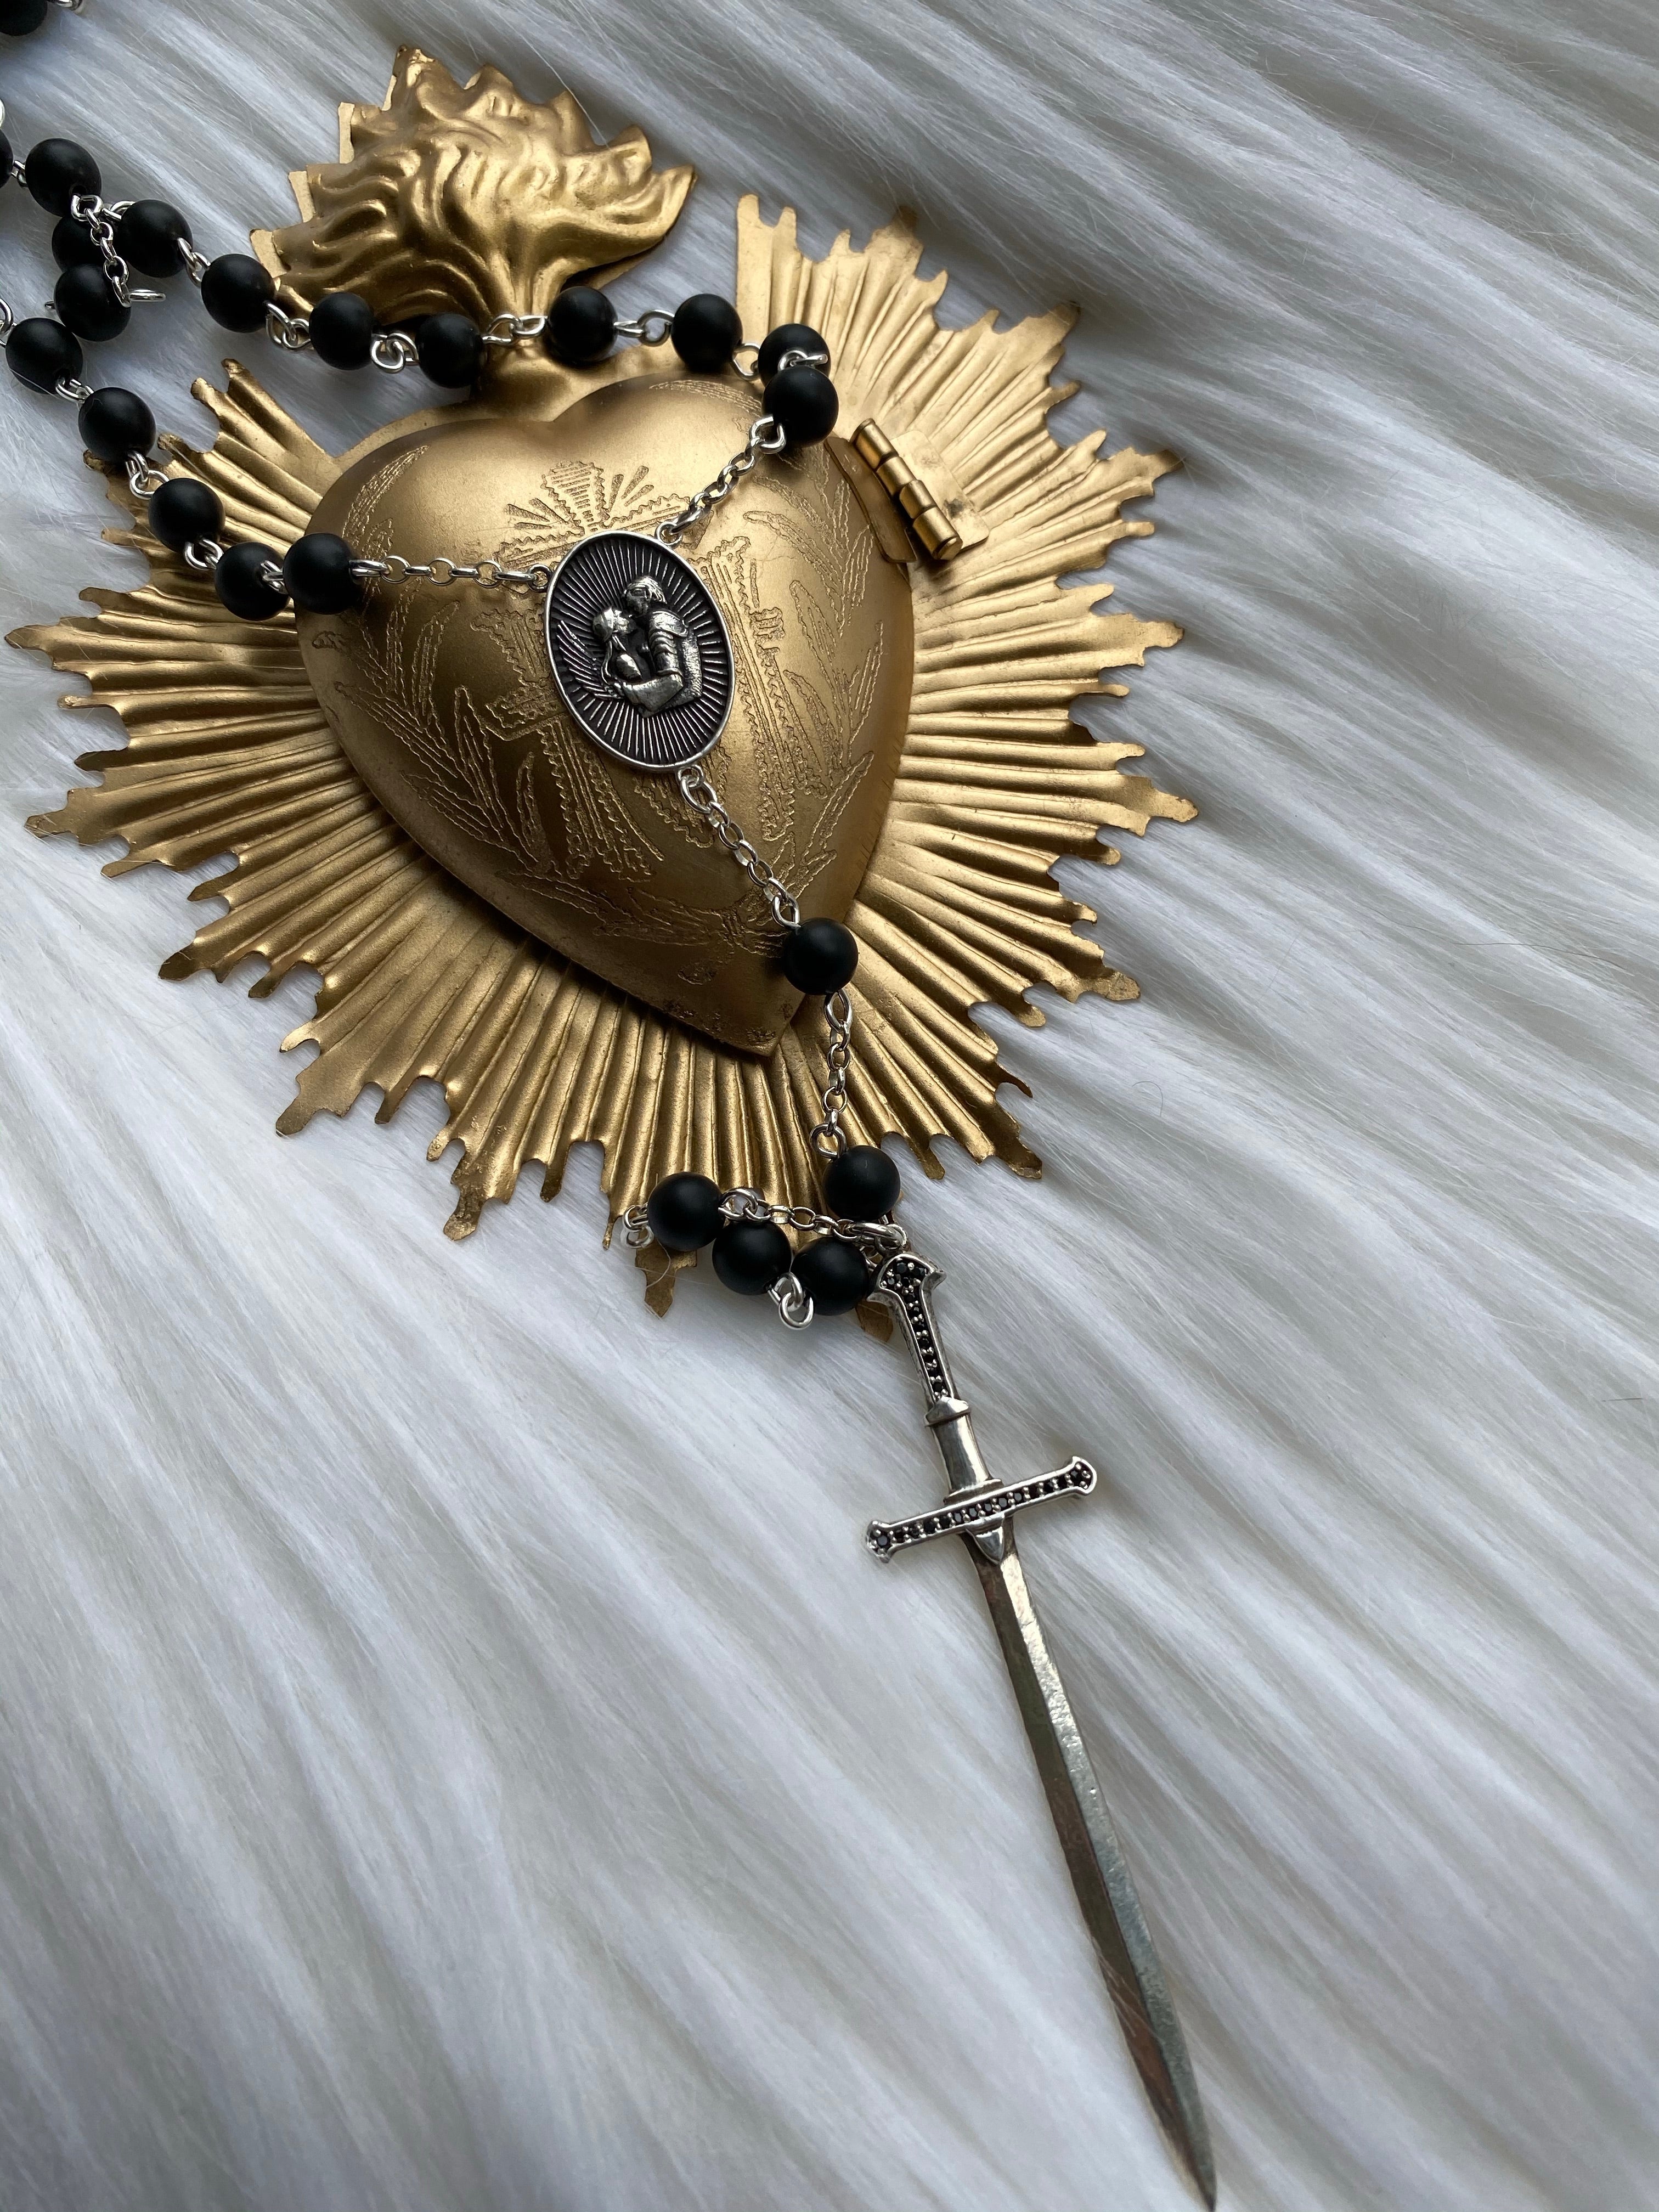 Black Onyx Rosary